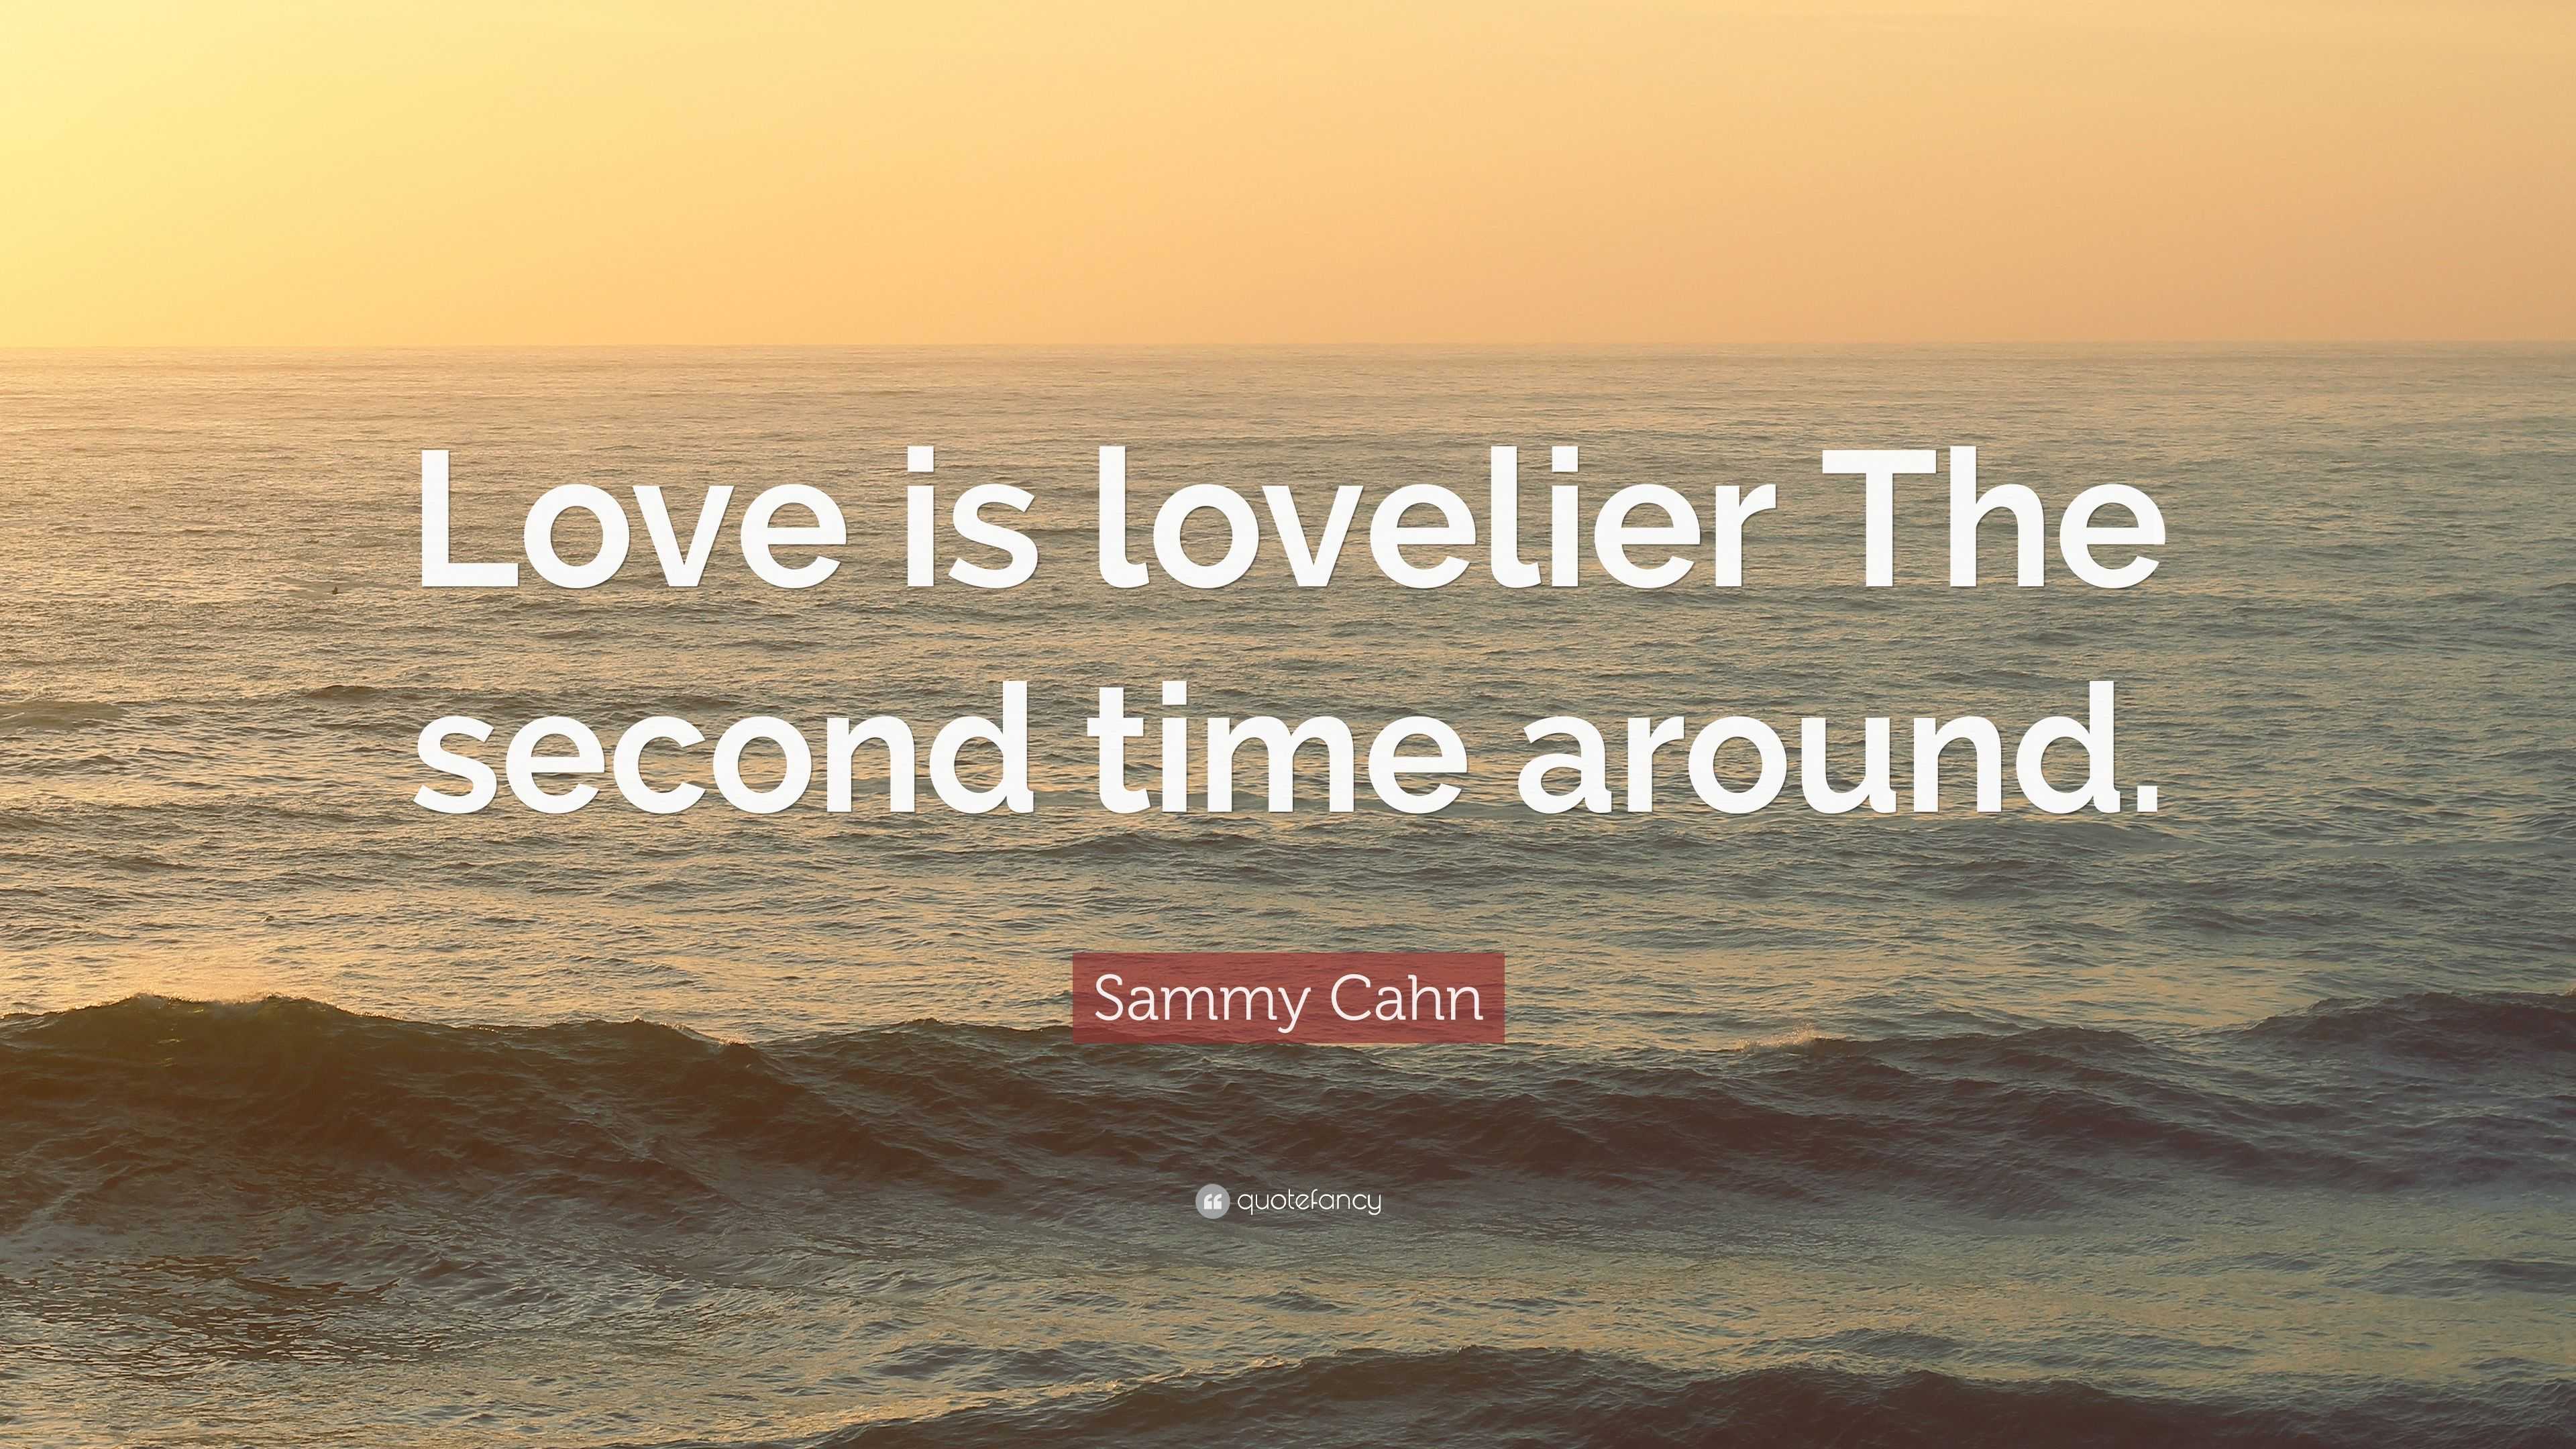 Sammy Cahn Quote “Love is lovelier The second time around ”